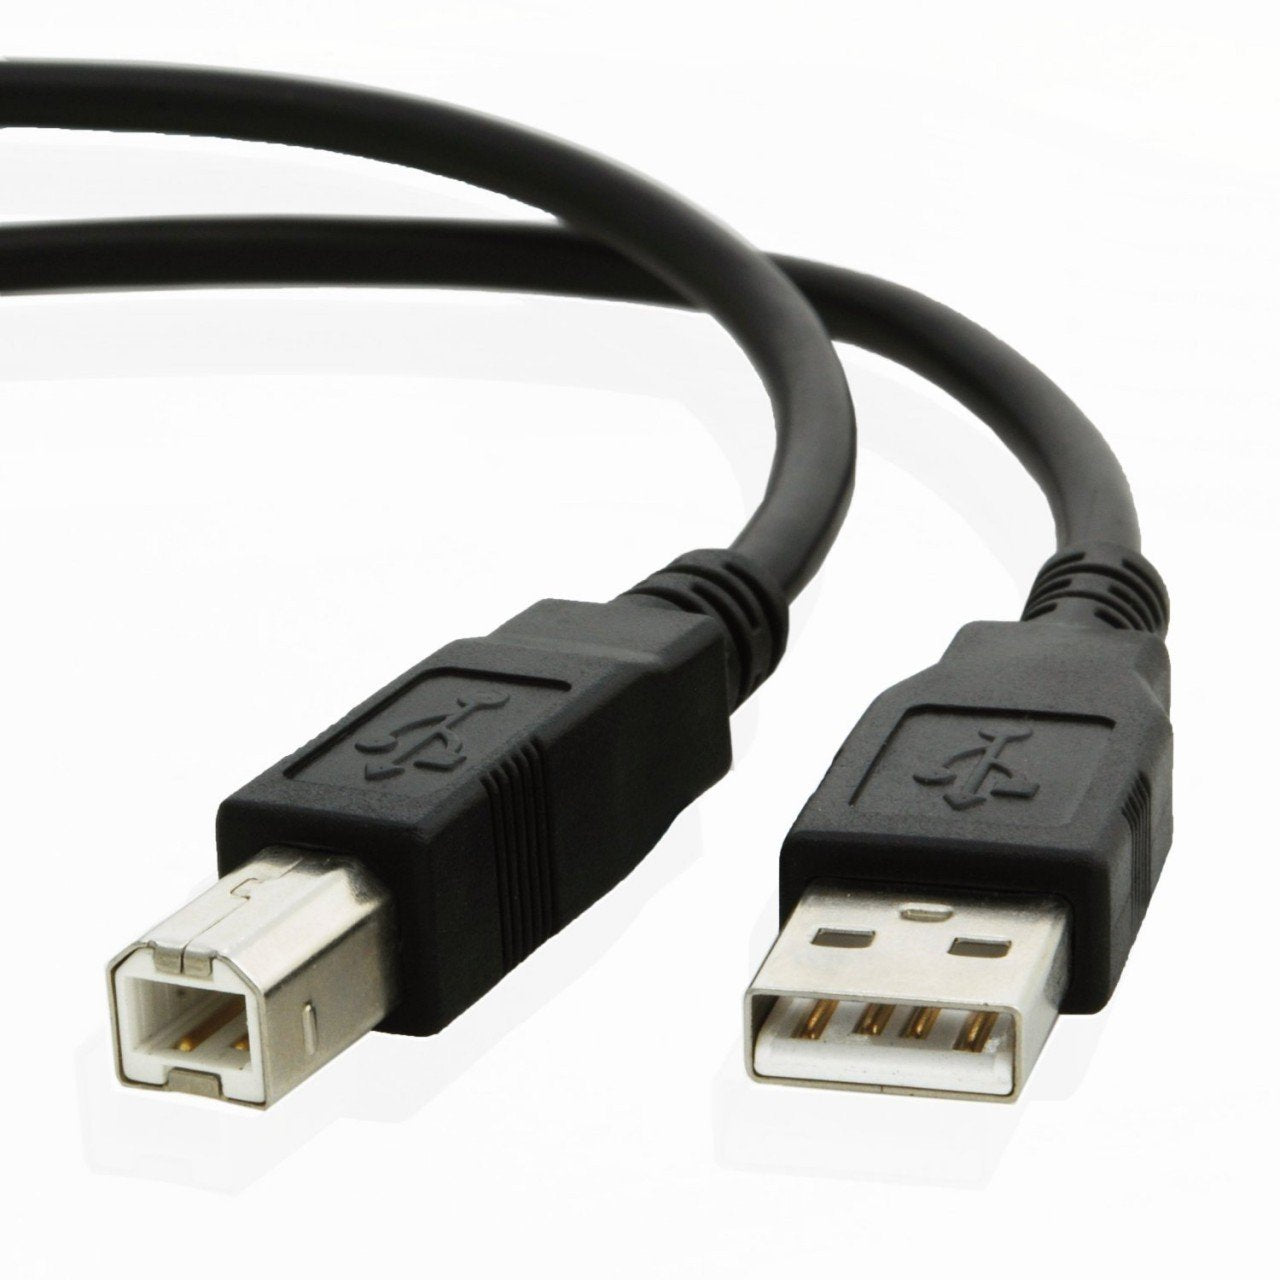 USB cable for Yamaha DIGITAL PIANO YPG-535